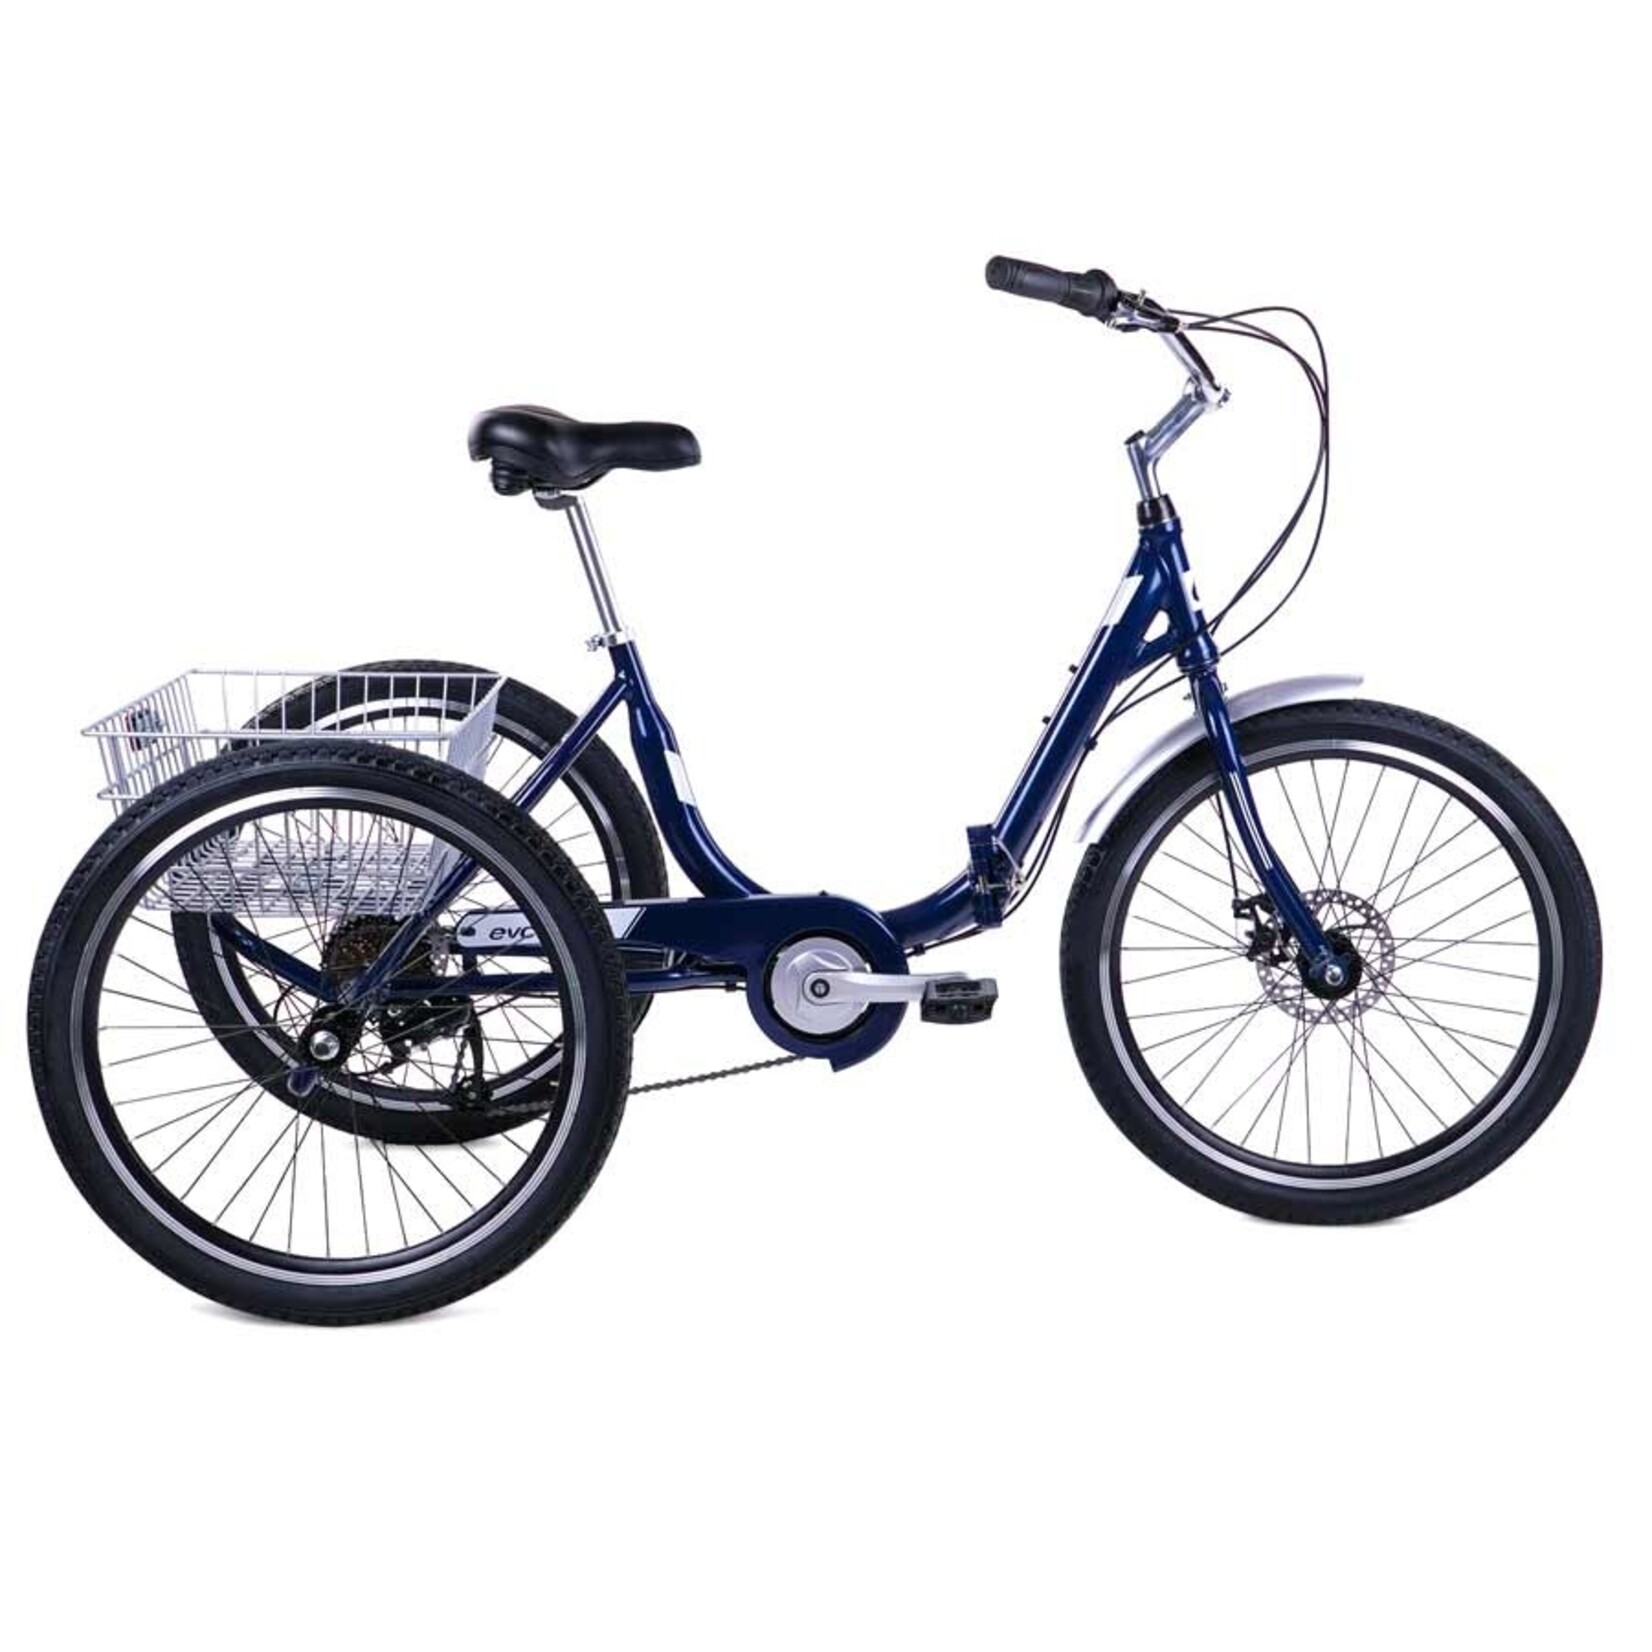 Evo Evo Tricycle, Latitude Trike, Adult